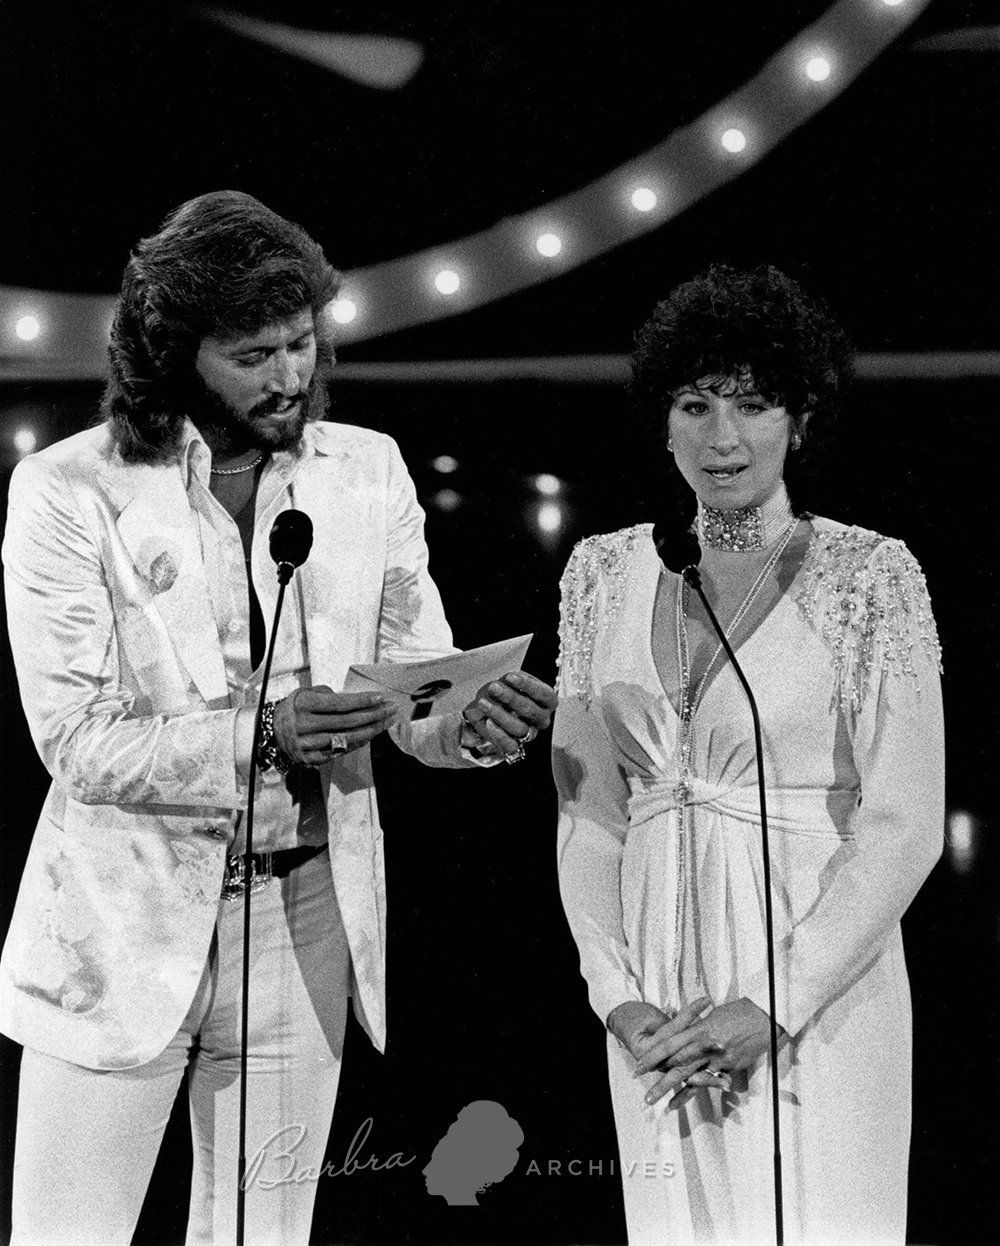 Barry Gibb and Barbra Streisand at the 1981 Grammy Awards.